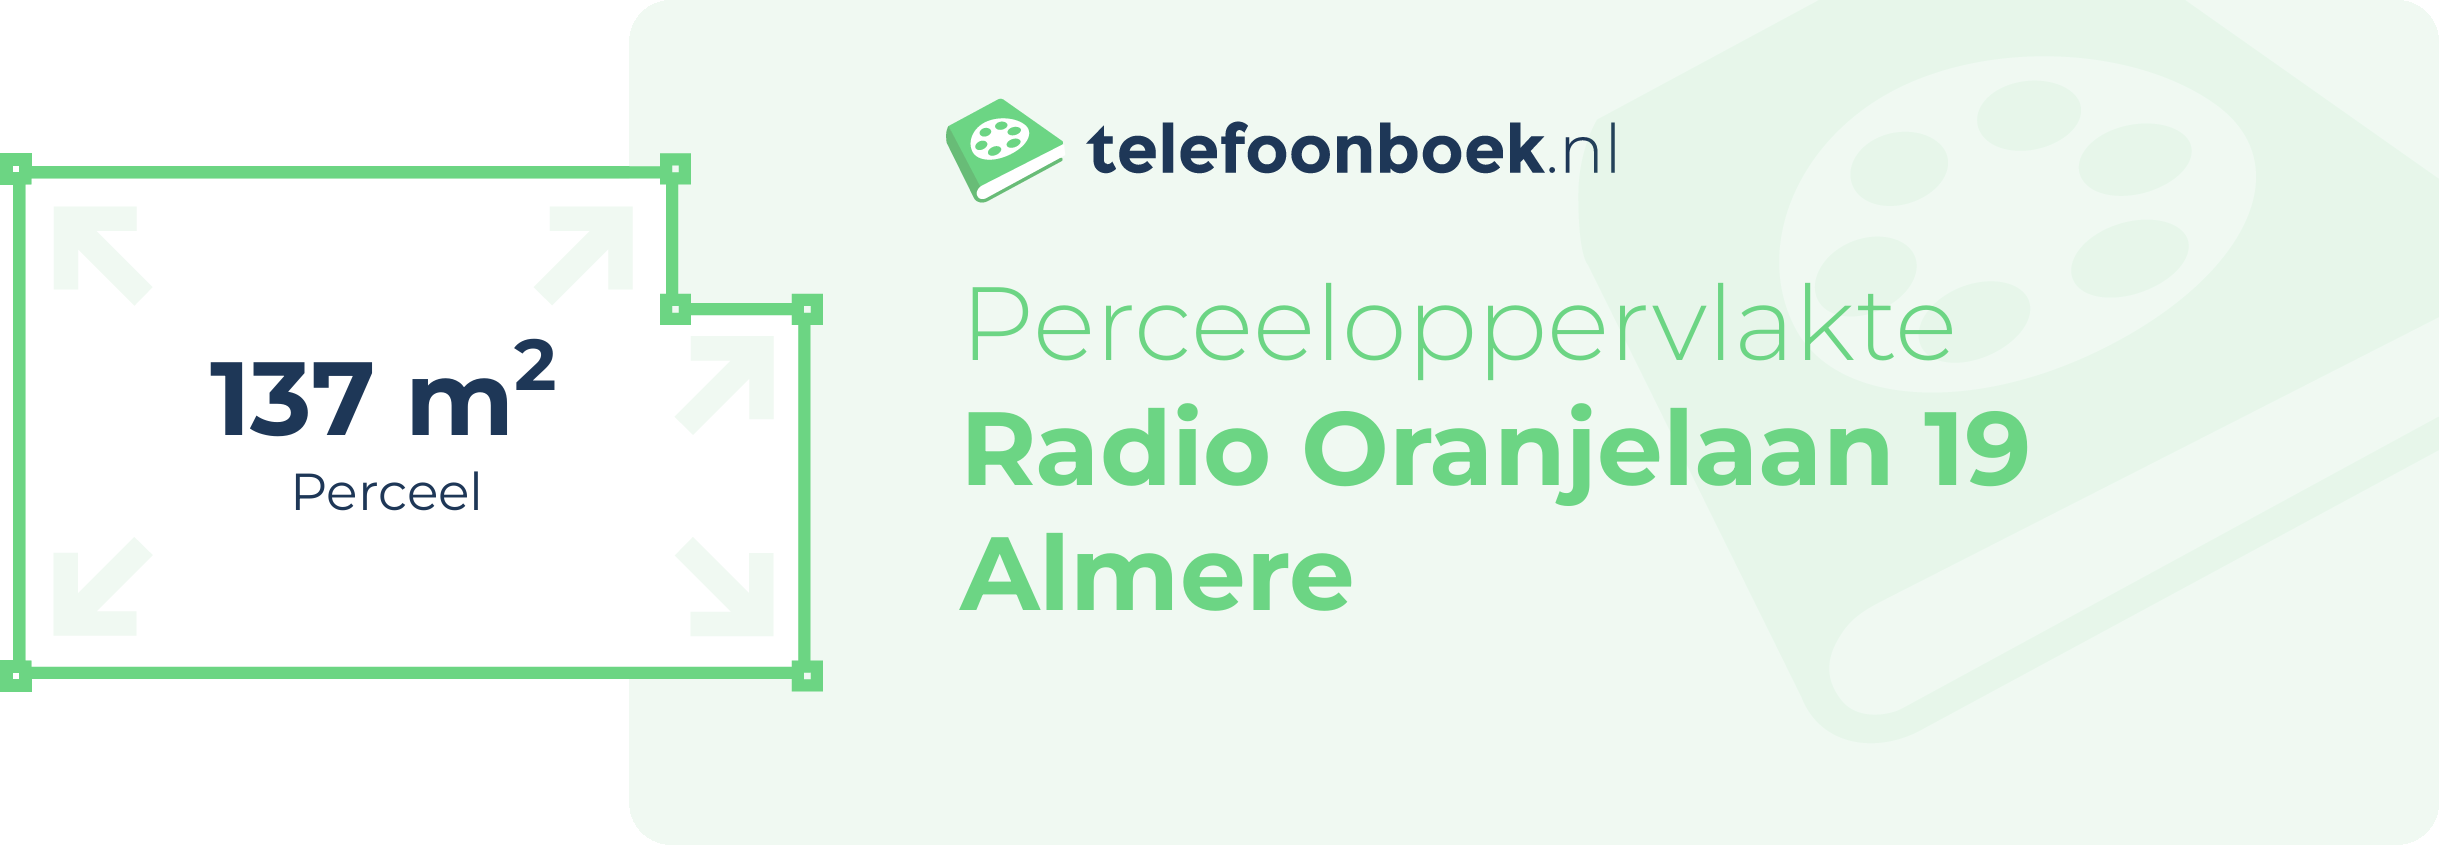 Perceeloppervlakte Radio Oranjelaan 19 Almere